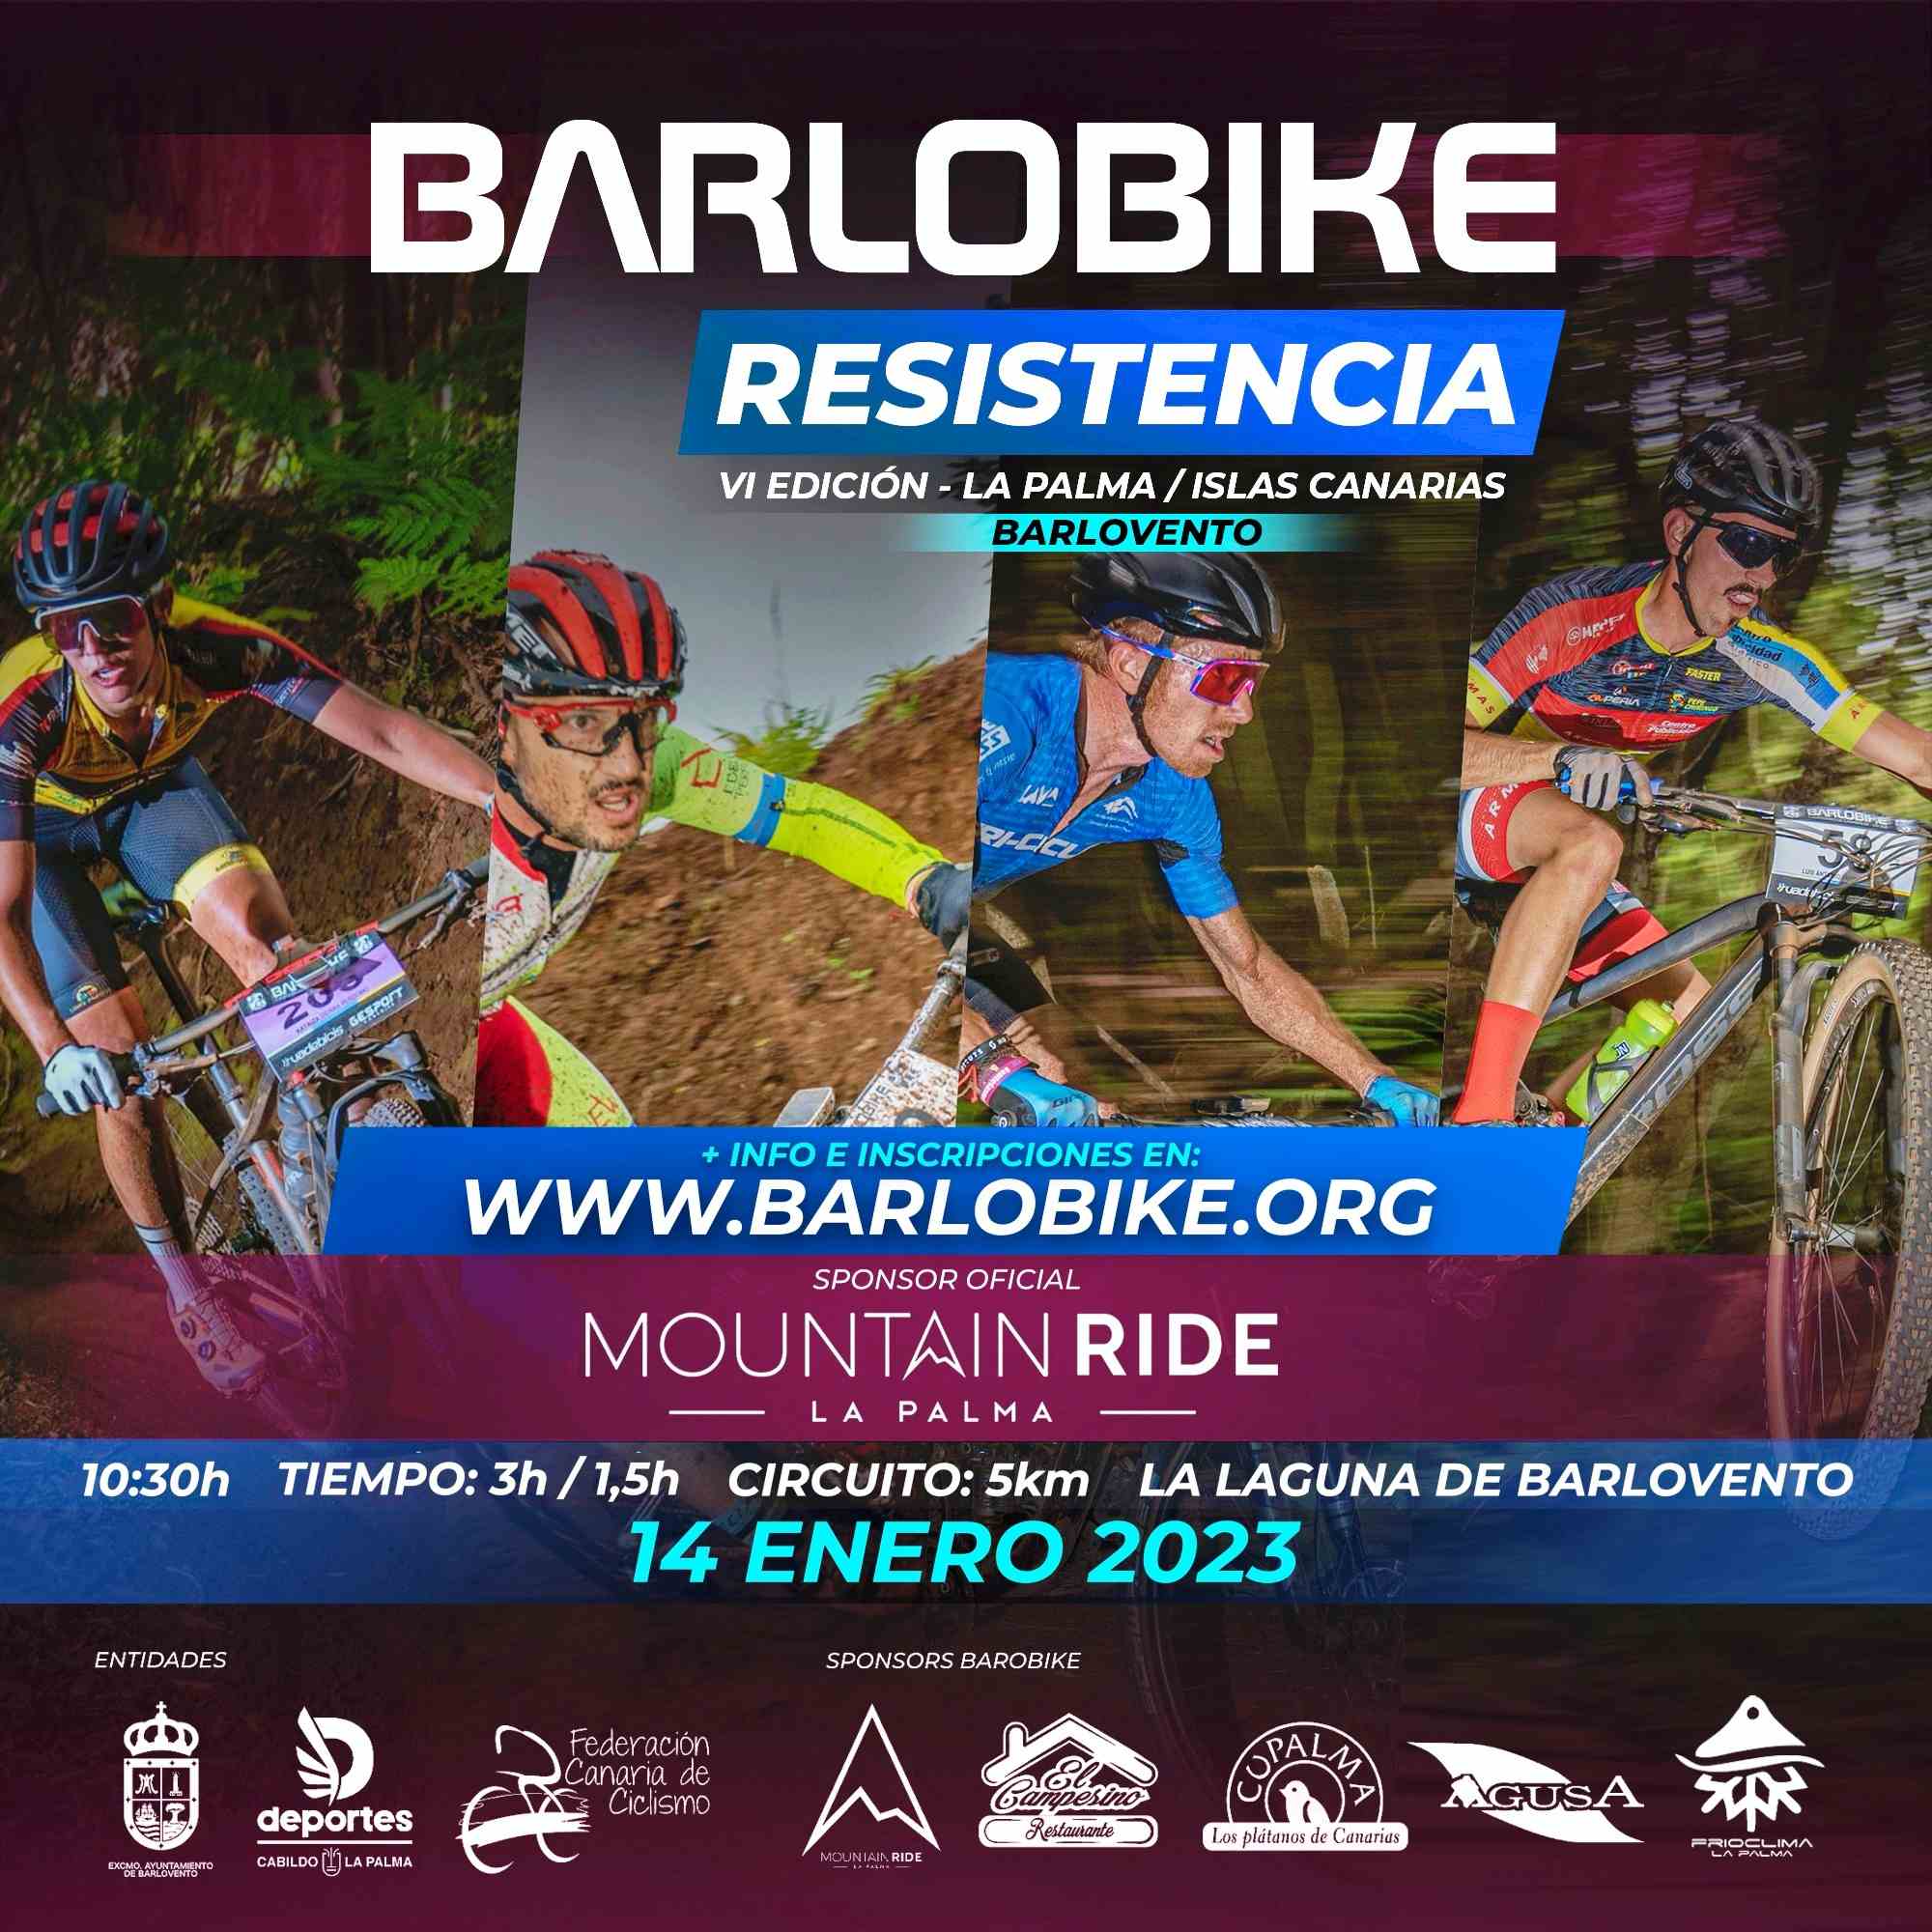 BARLOBIKE XC0 RESISTENCIA 2023 - Inscriu-te